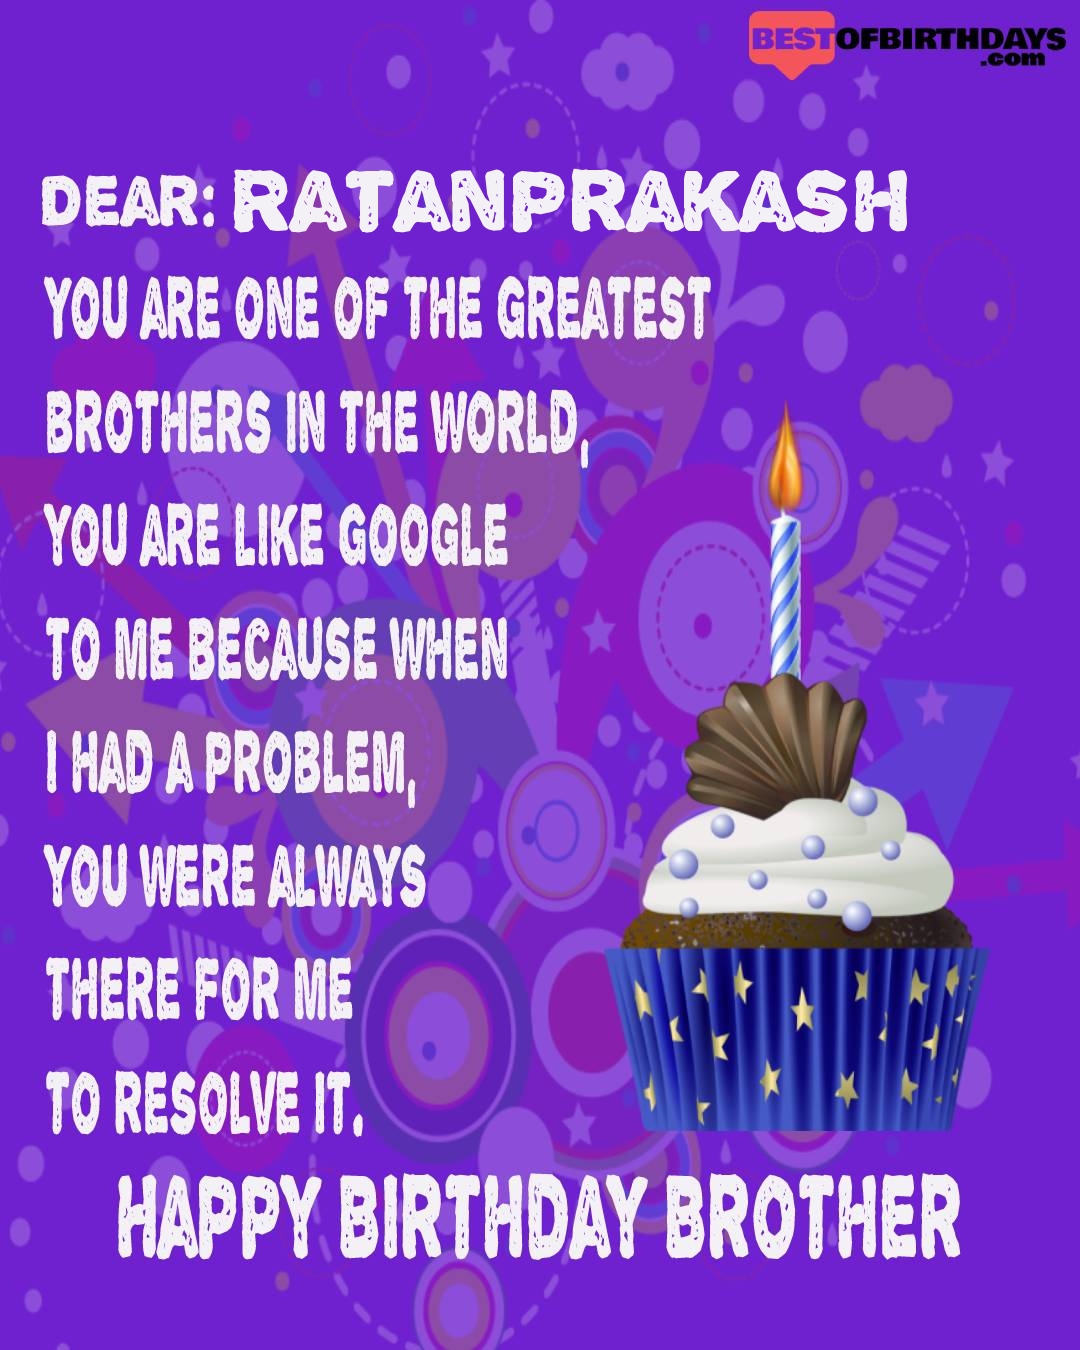 Happy birthday ratanprakash bhai brother bro